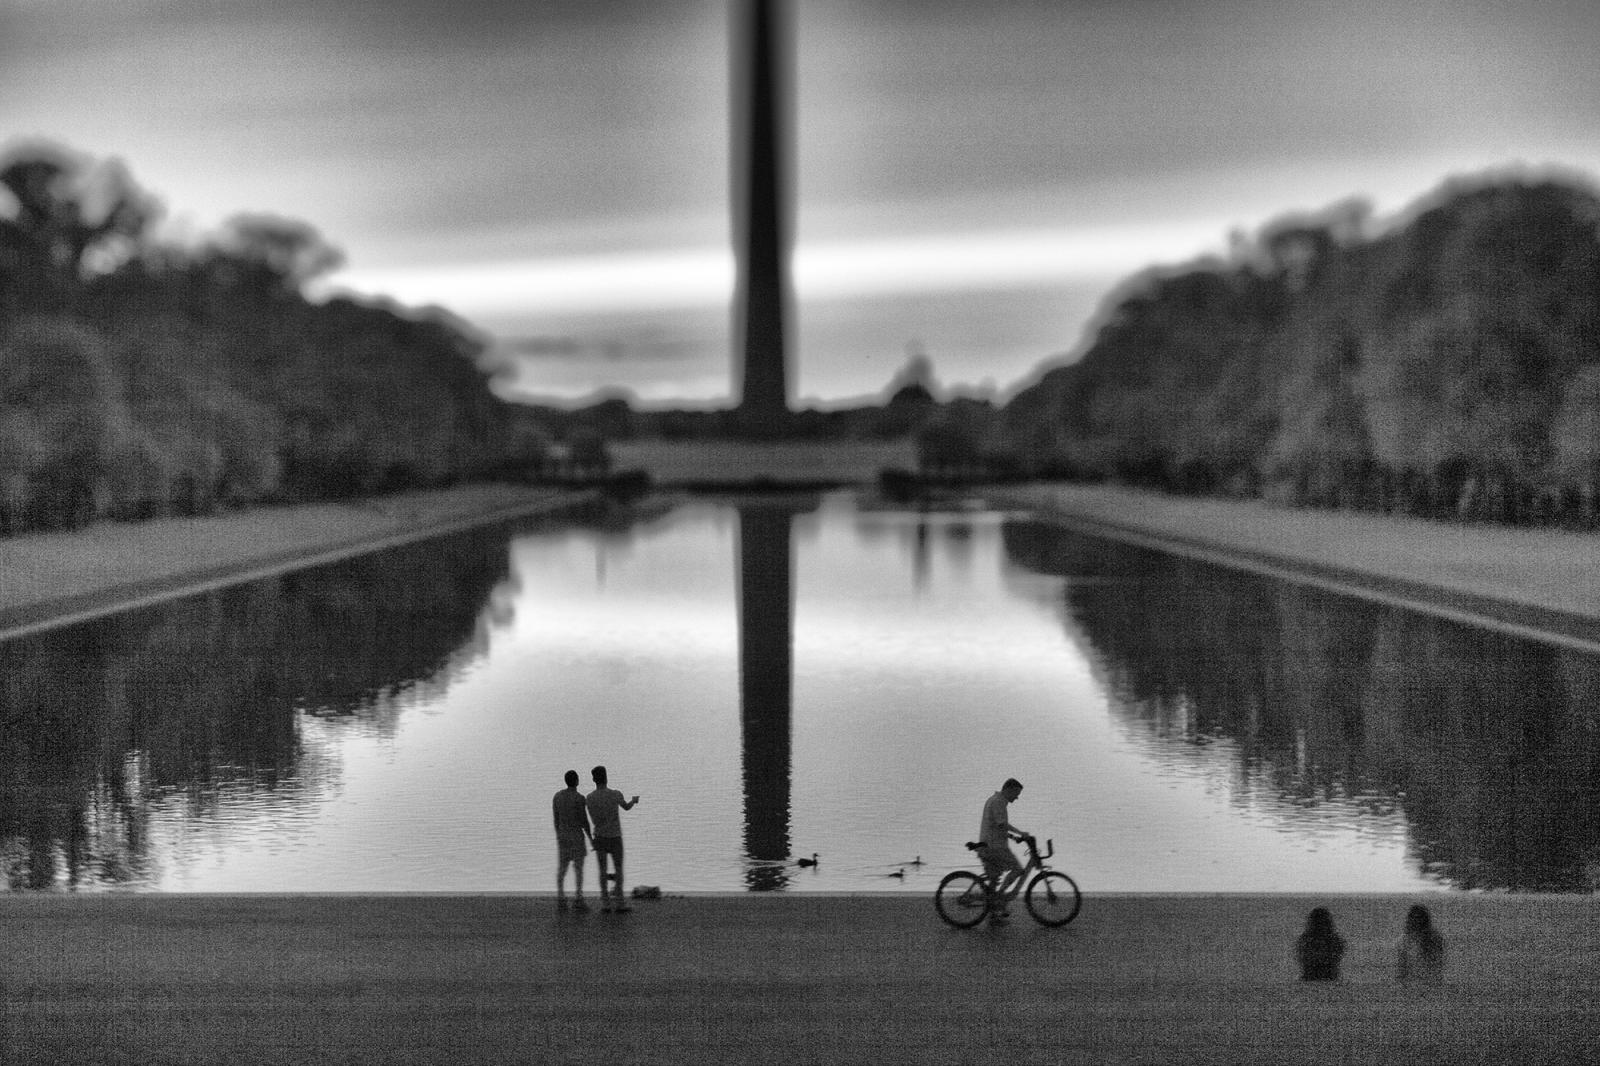 The reflecting pool, looking towards the Washington Monument